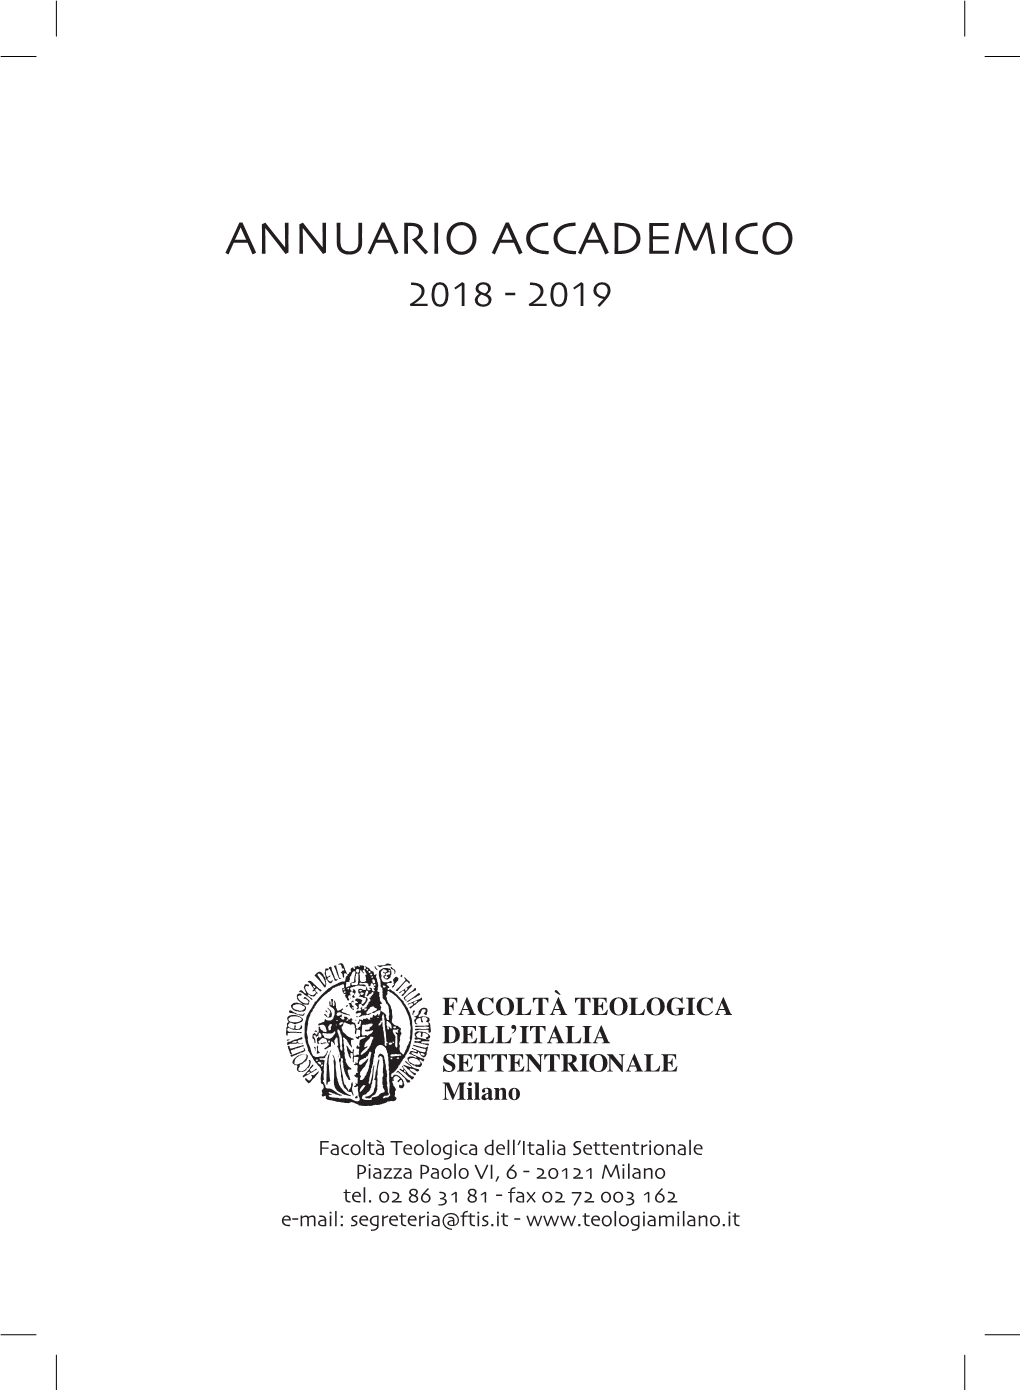 Annuario Accademico 2017-20182018 - 2019